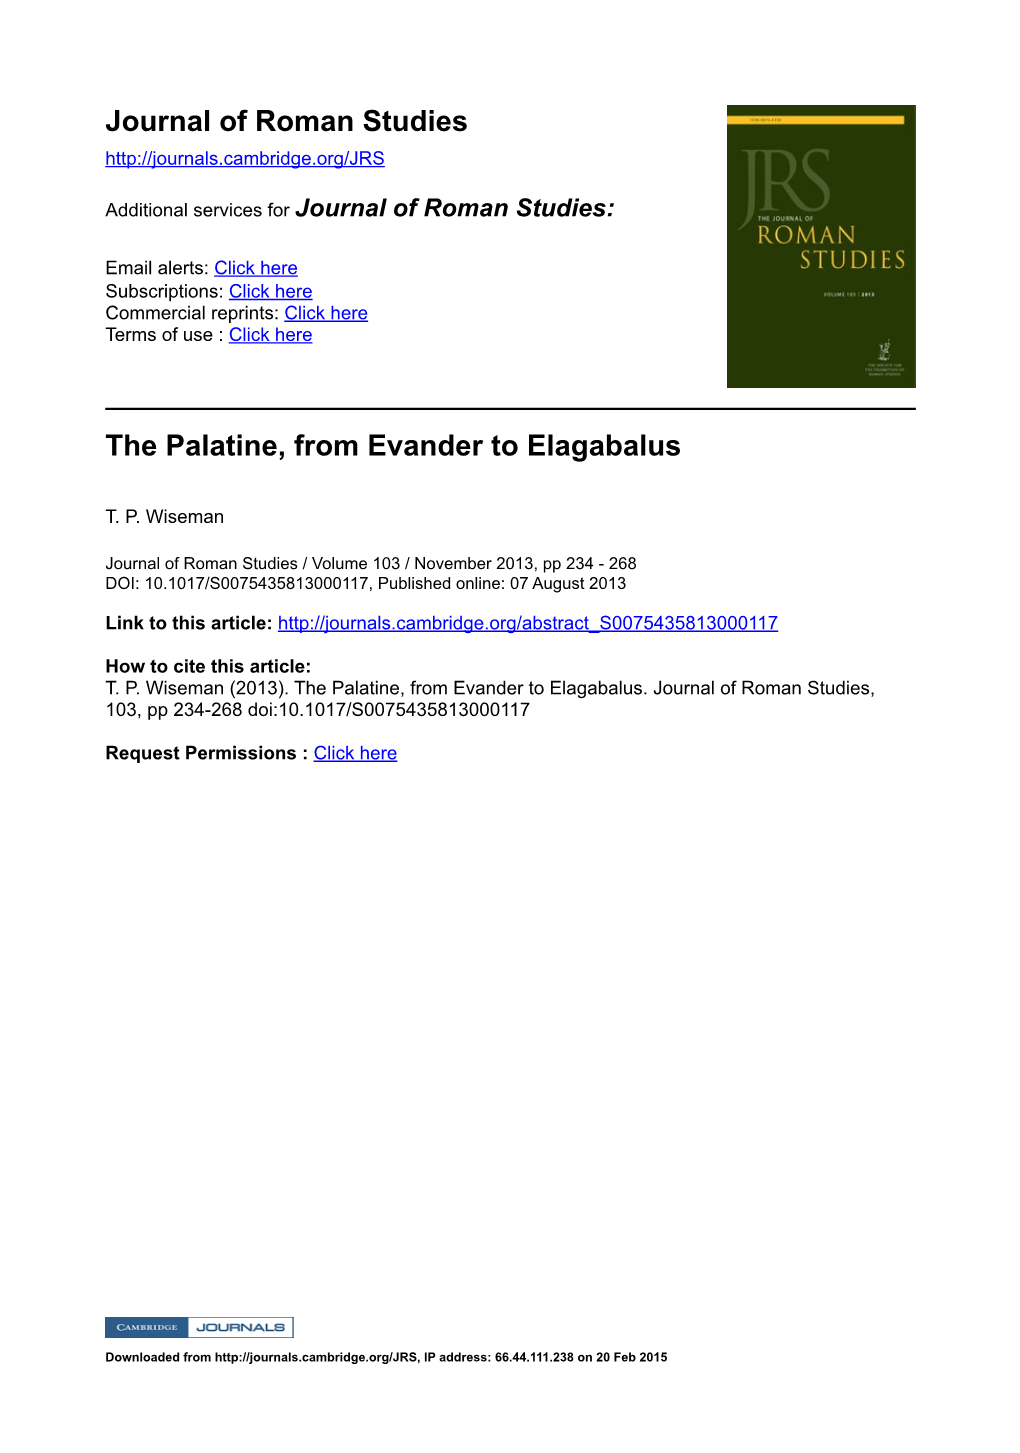 Journal of Roman Studies the Palatine, from Evander to Elagabalus